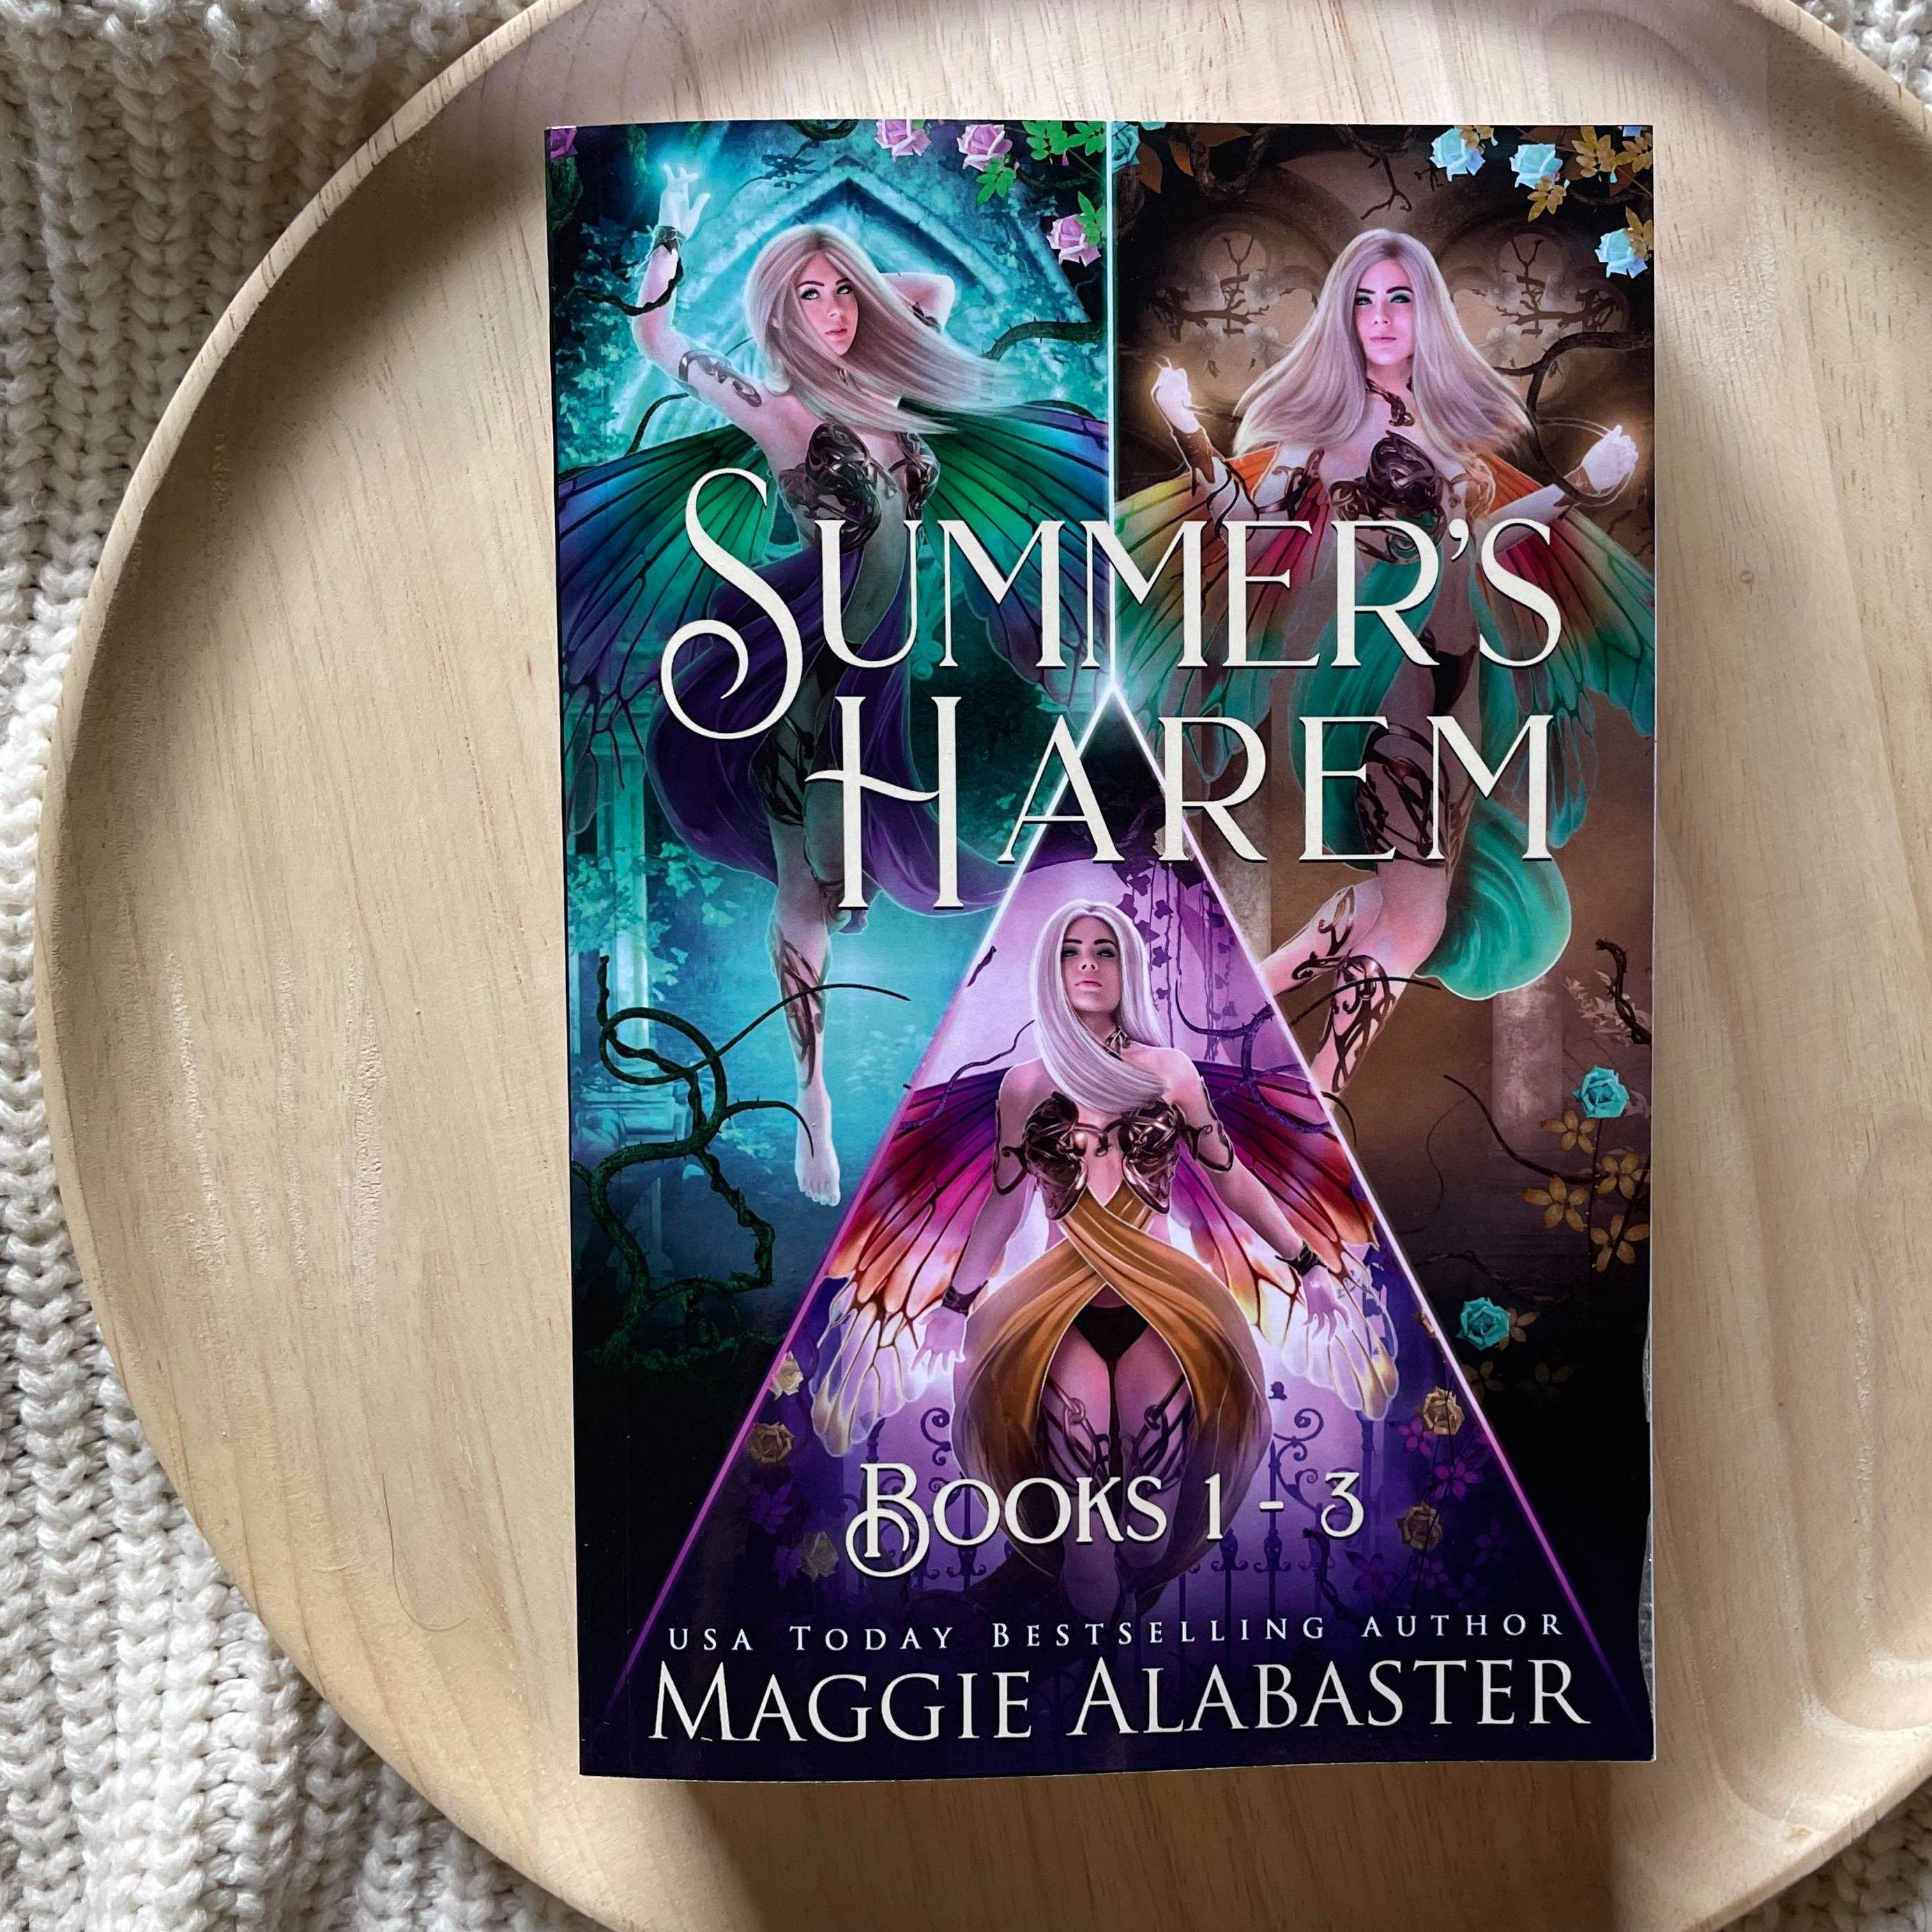 Summers Harem series by Maggie Alabaster